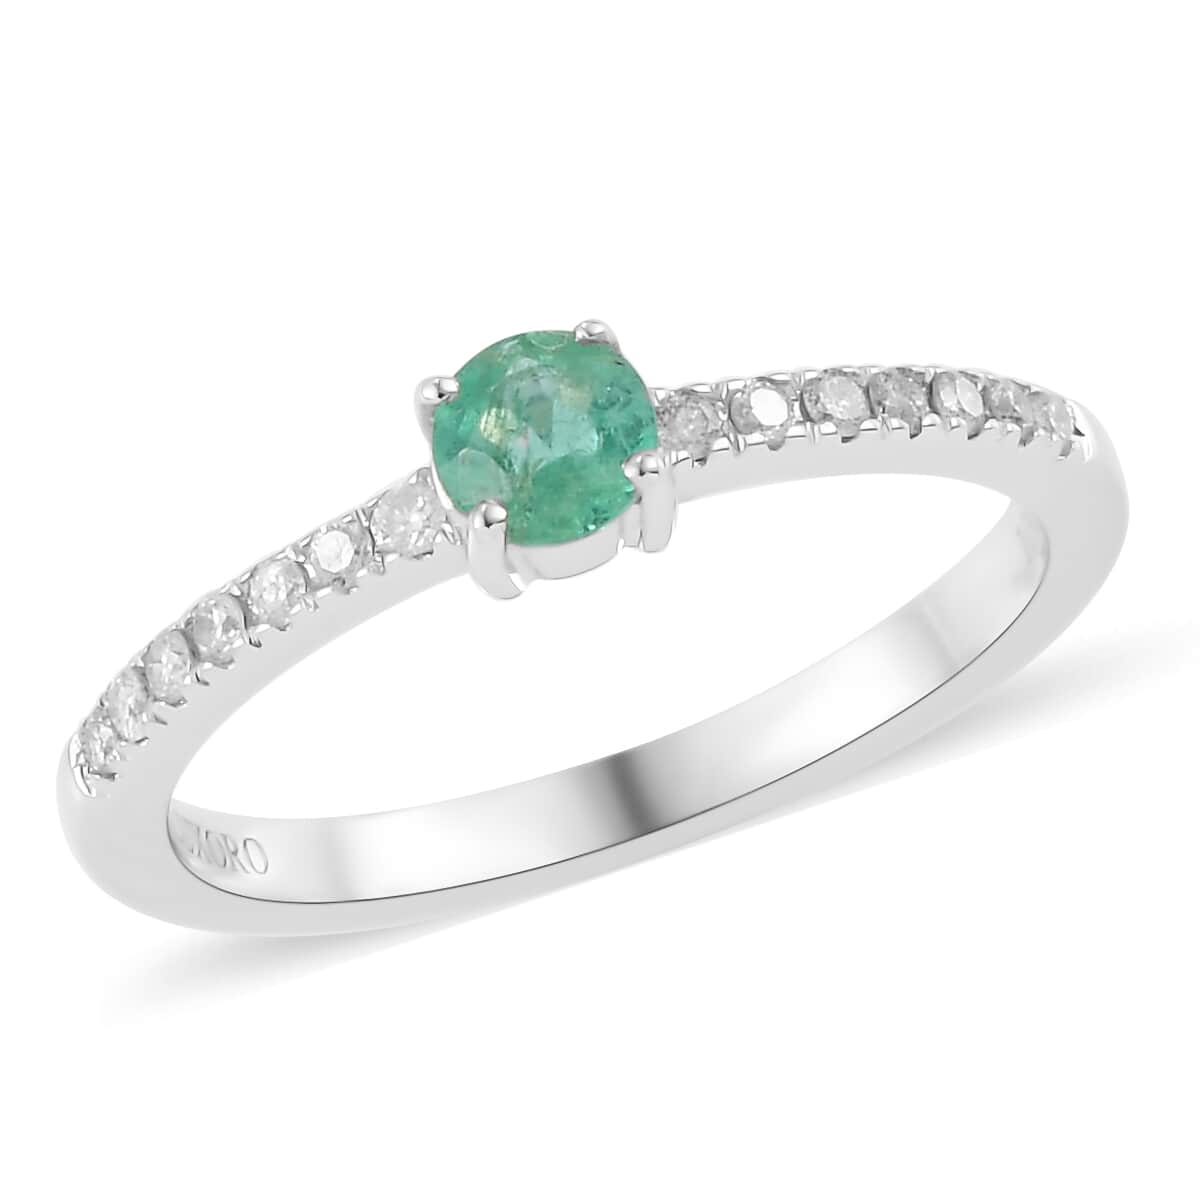 LUXORO 10K White Gold Premium Boyaca Colombian Emerald and Diamond Dainty Ring (Size 9.0) 0.35 ctw image number 0